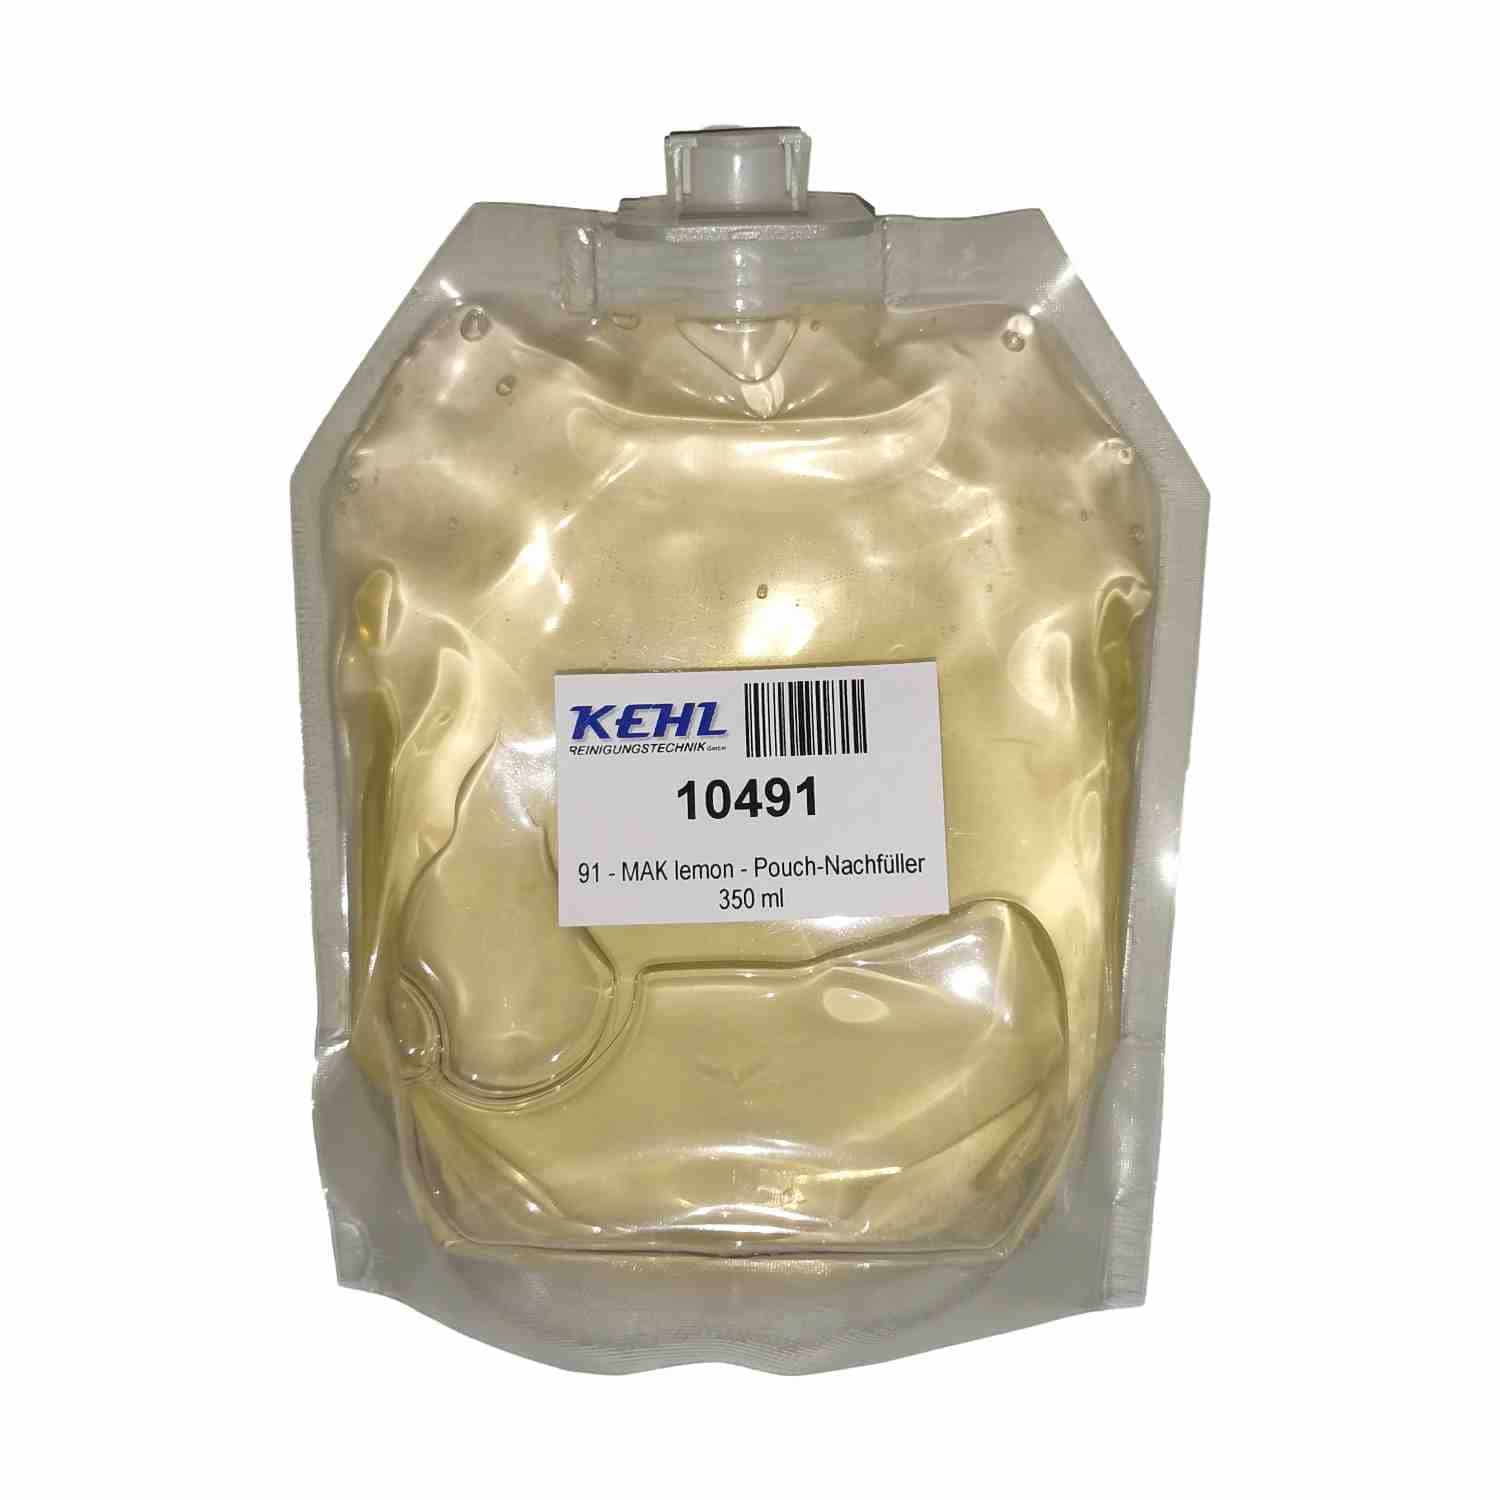 91 - MAK lemon - Pouch-Nachfüller  350 ml 